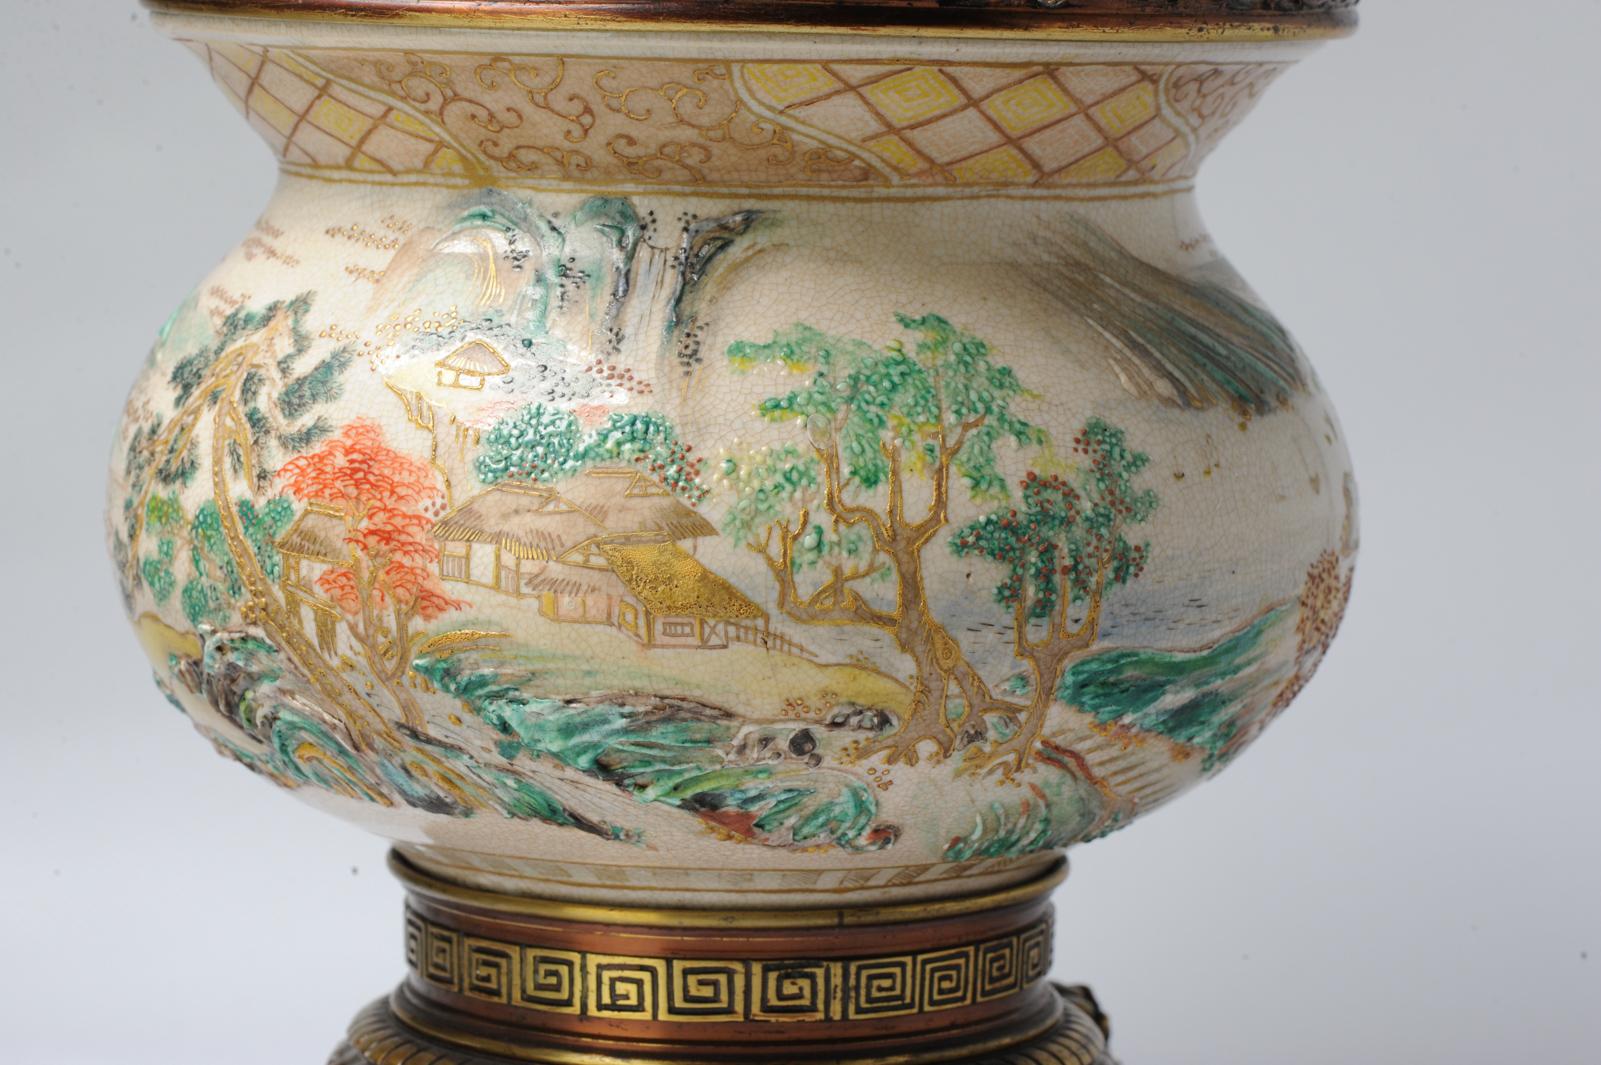  Antique Beautiful Japanese Satsuma Bowl Lndscape Oromulu Japan Porcelain 19C For Sale 3